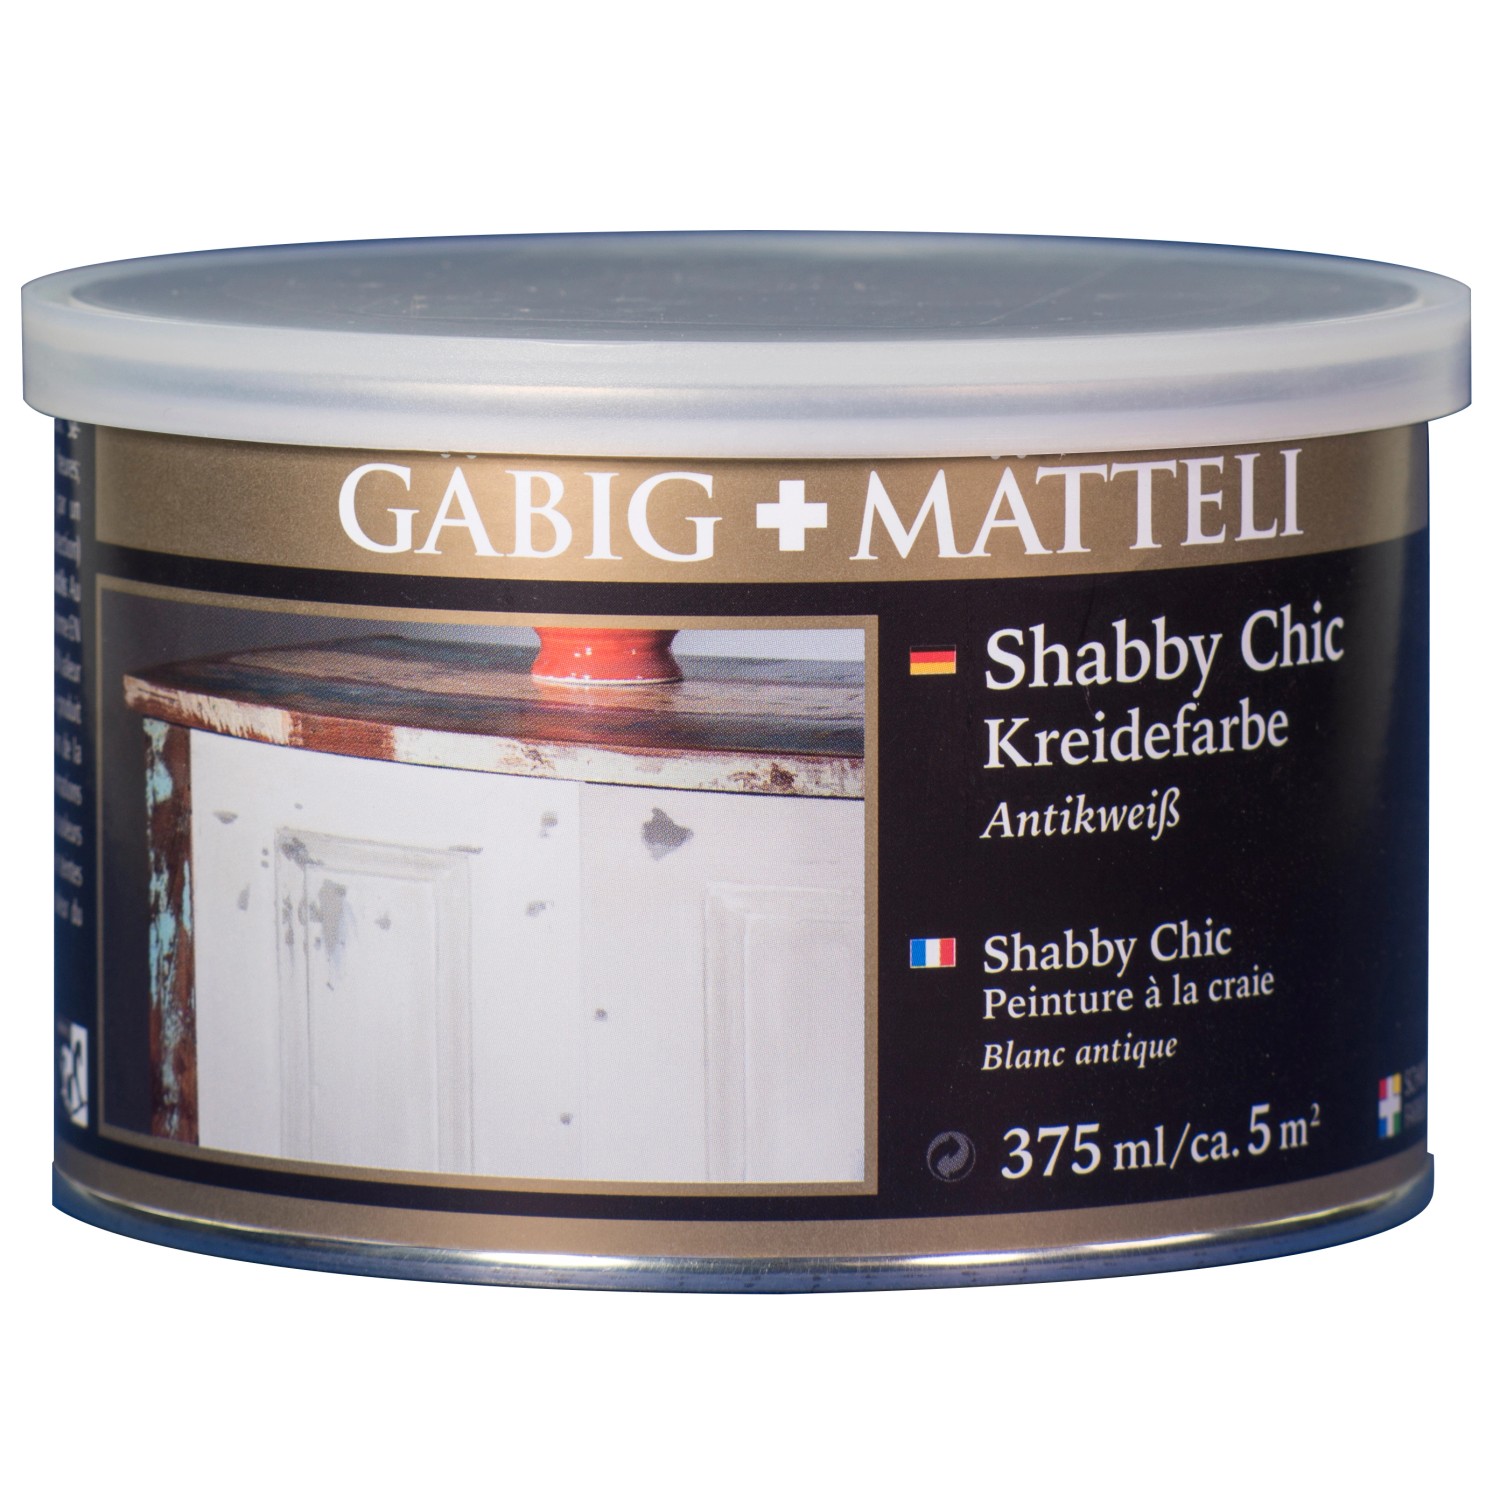 Gäbig+Mätteli Shabby Chic Kreidefarbe Antikweiß matt 375 ml von Gäbig+Mätteli